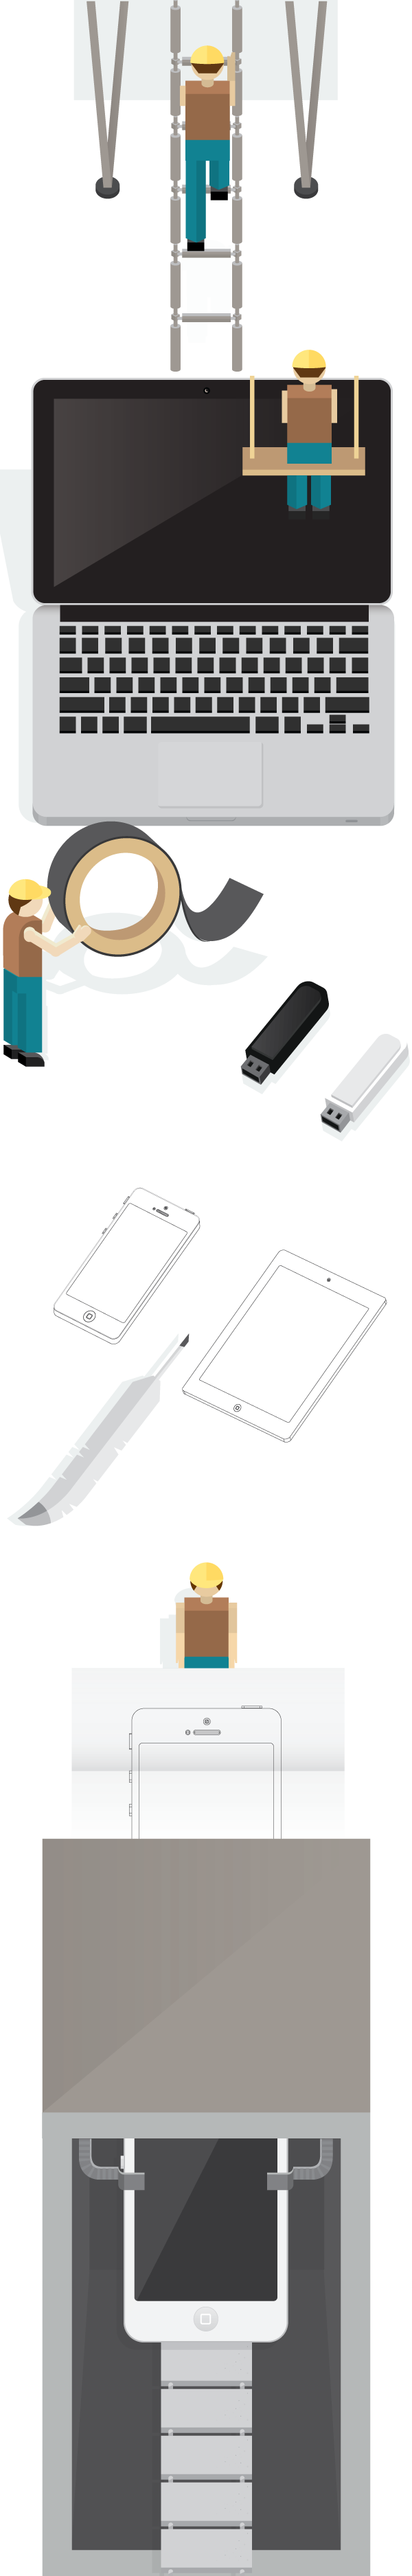 design Icon apple iPad iphone vector templates mockups desk studio Office tablet